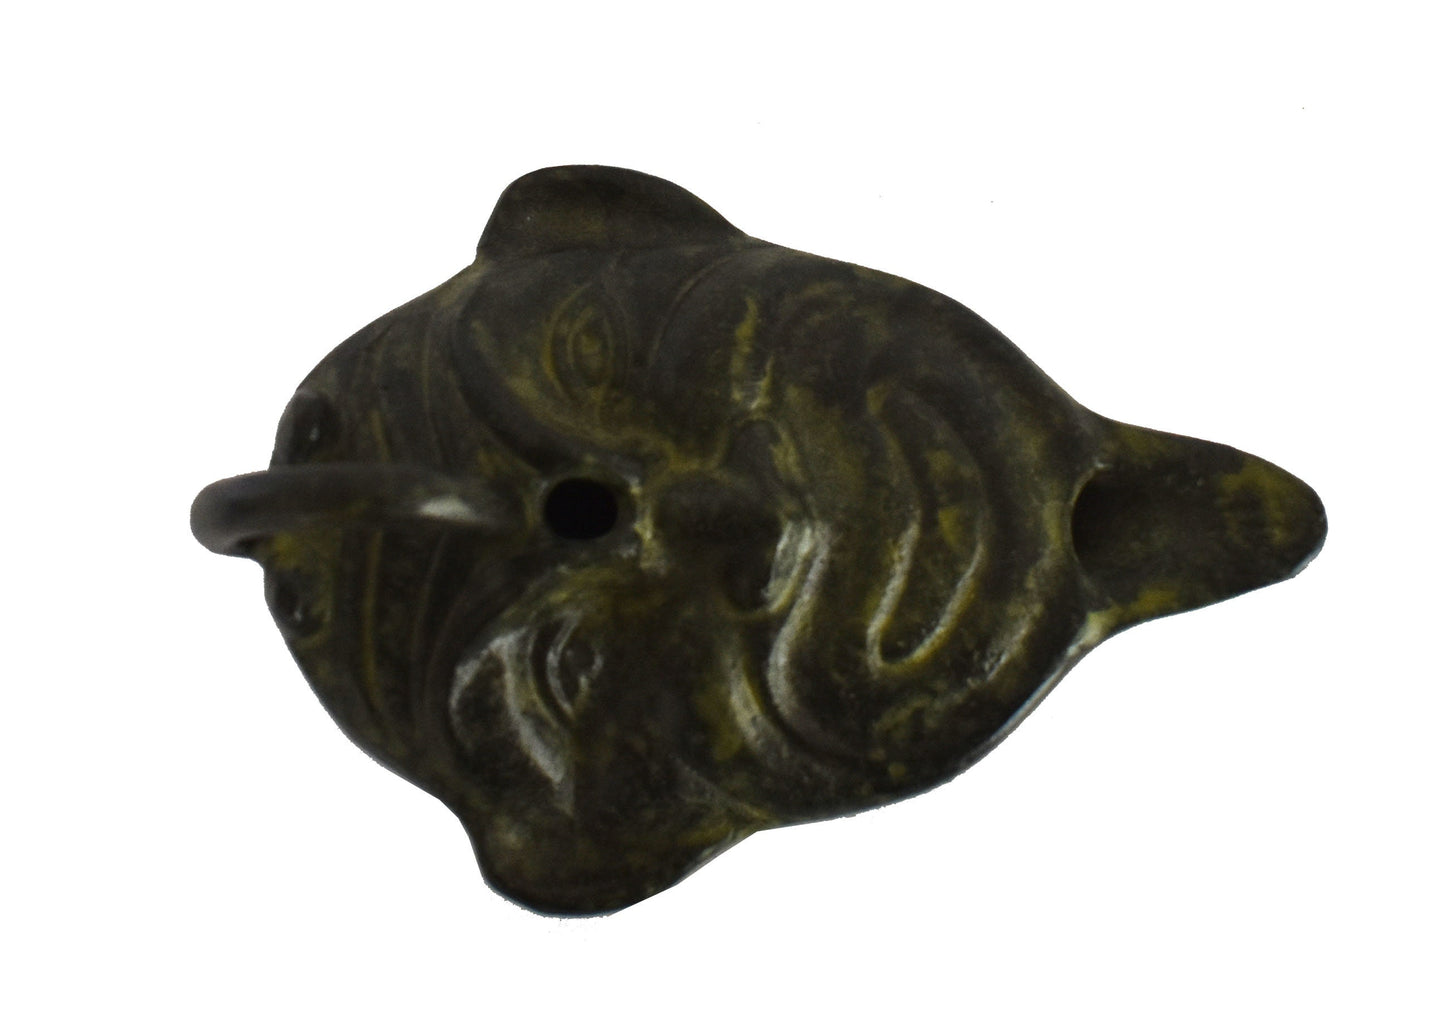 Bronze oil lamp - Satyr face - ancient Greek reproduction artifact